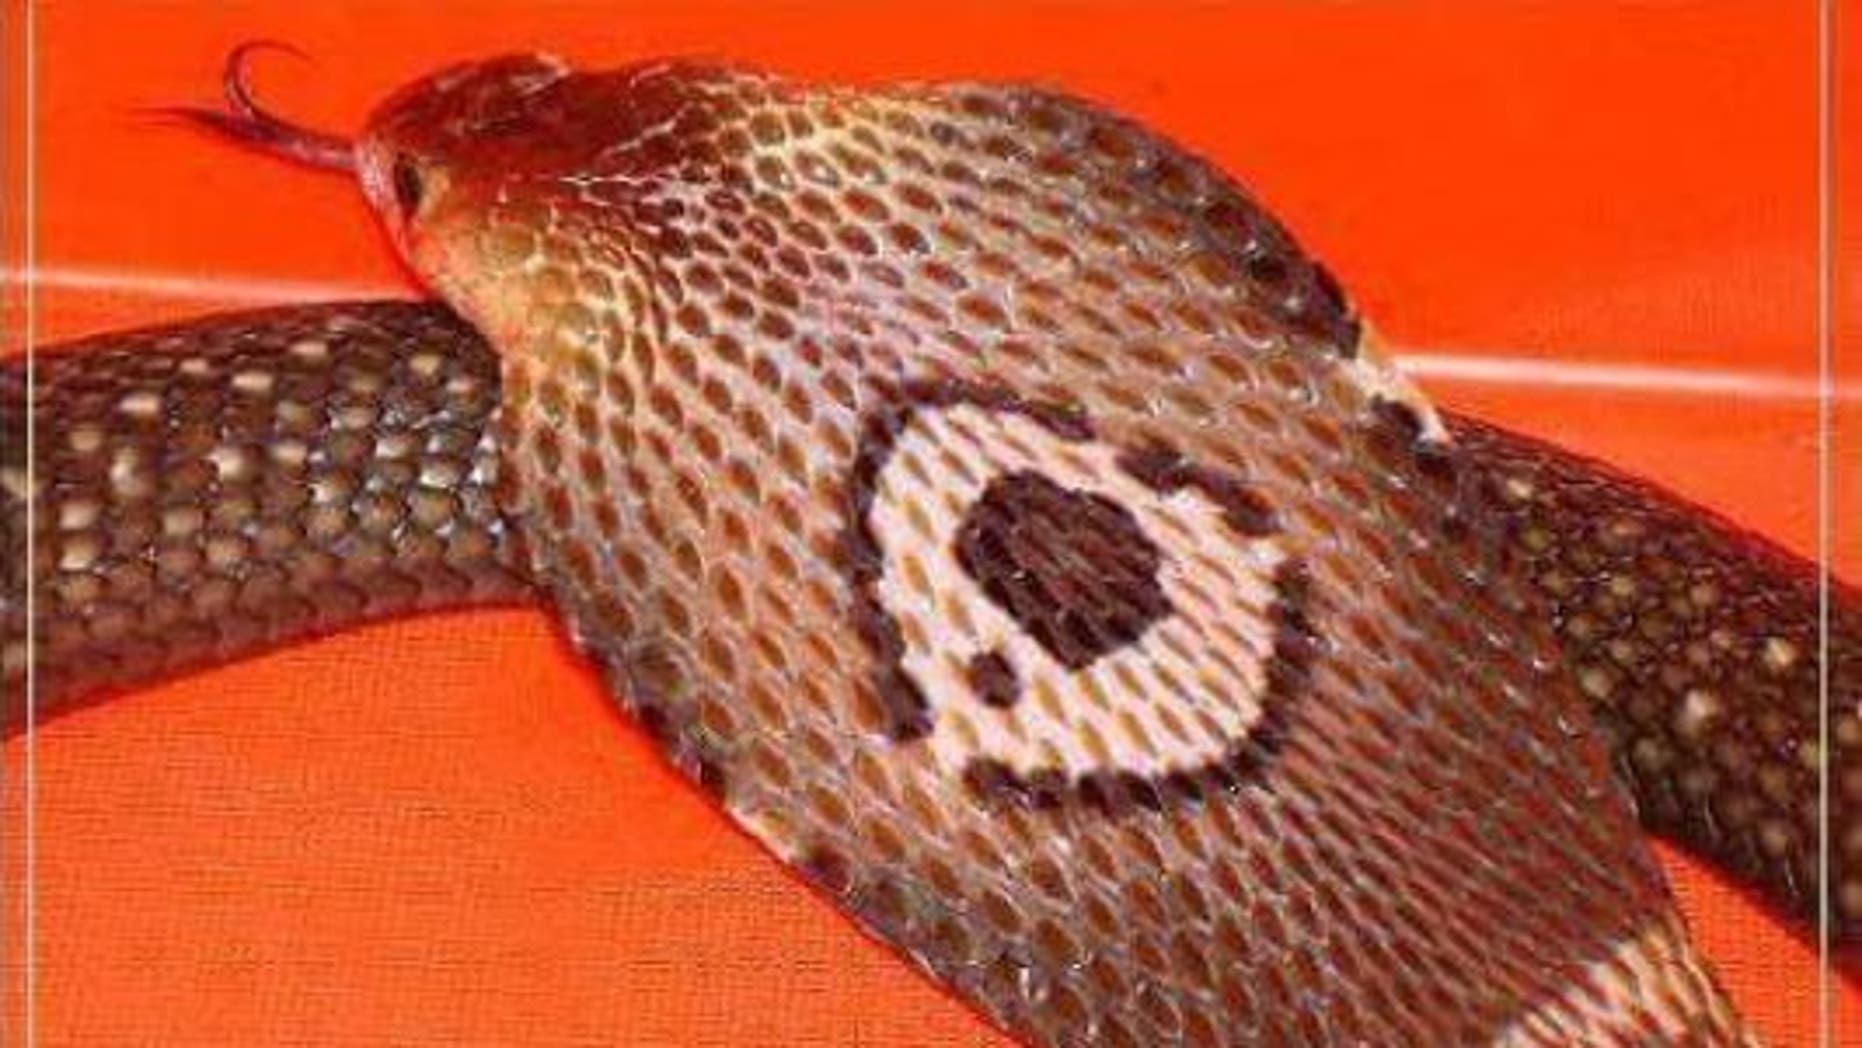 poisonous snake escape florida